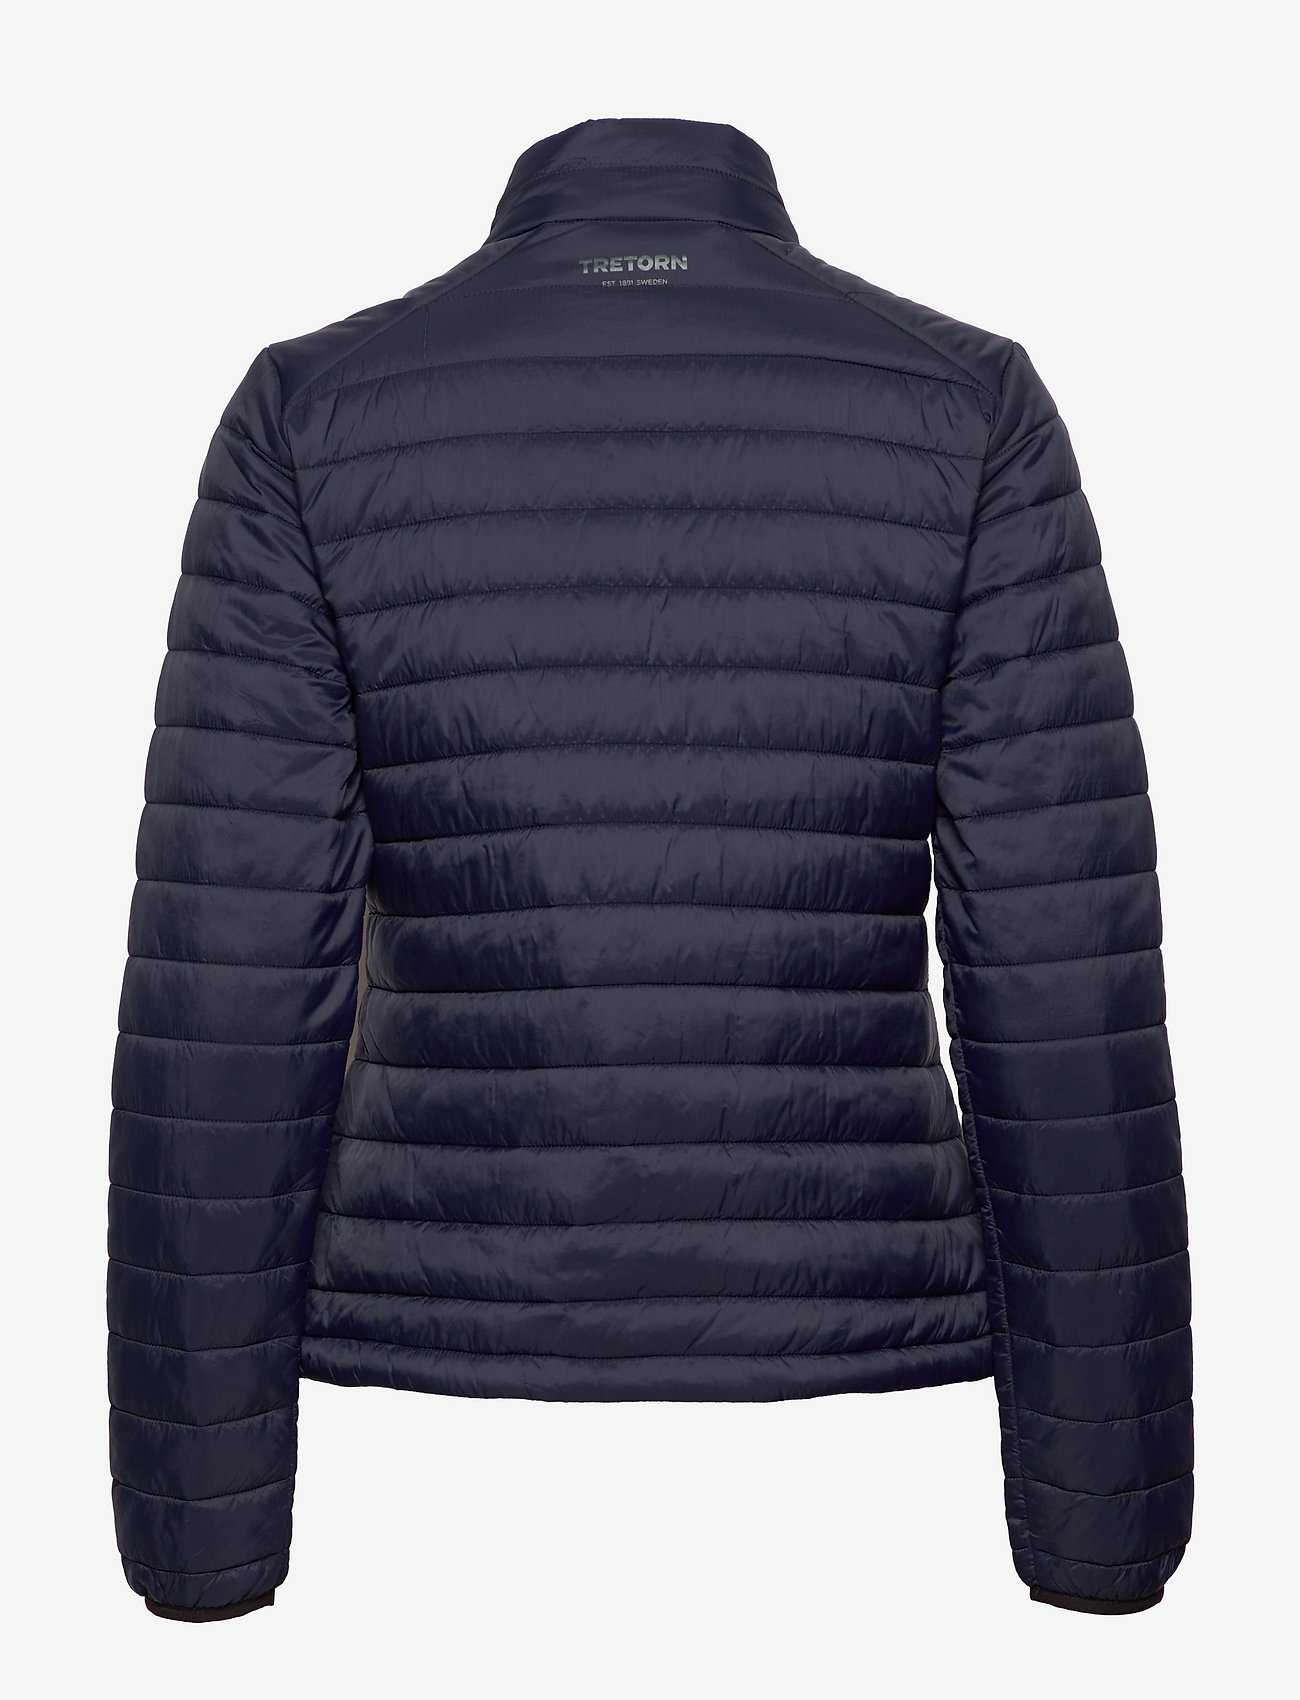 Tretorn - SHELTER LINER W's - winter jacket - 080/navy - 1